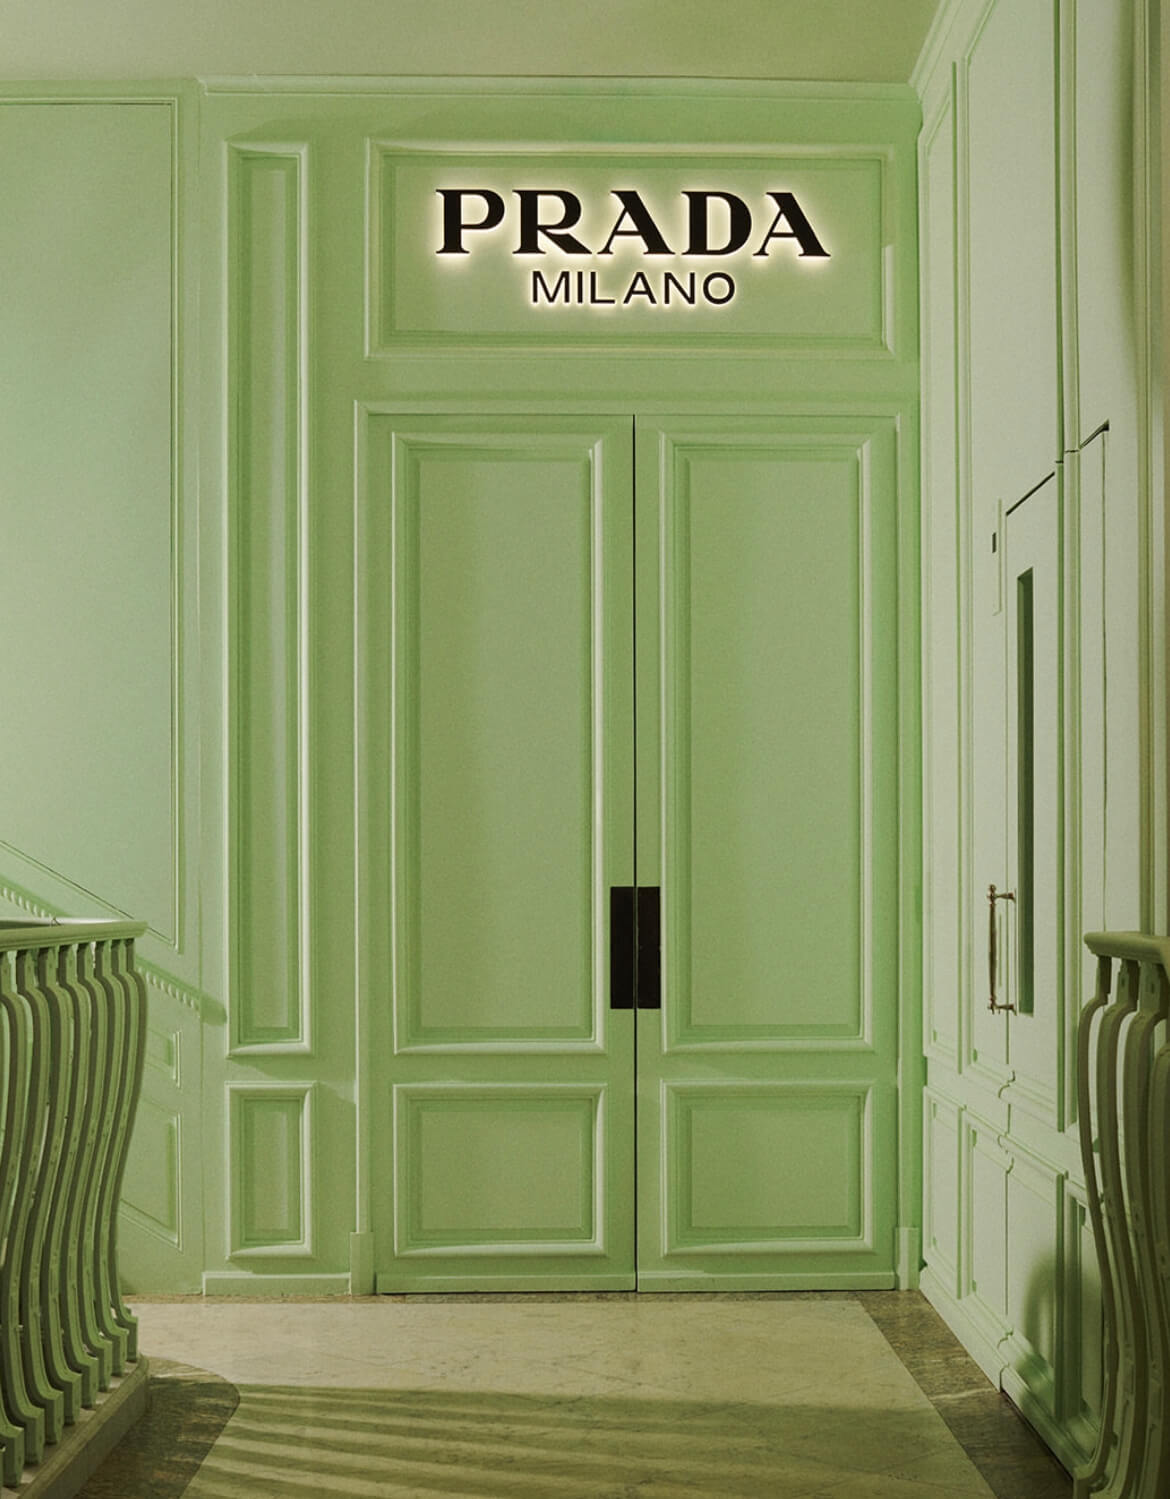 The Prada Group sustainability